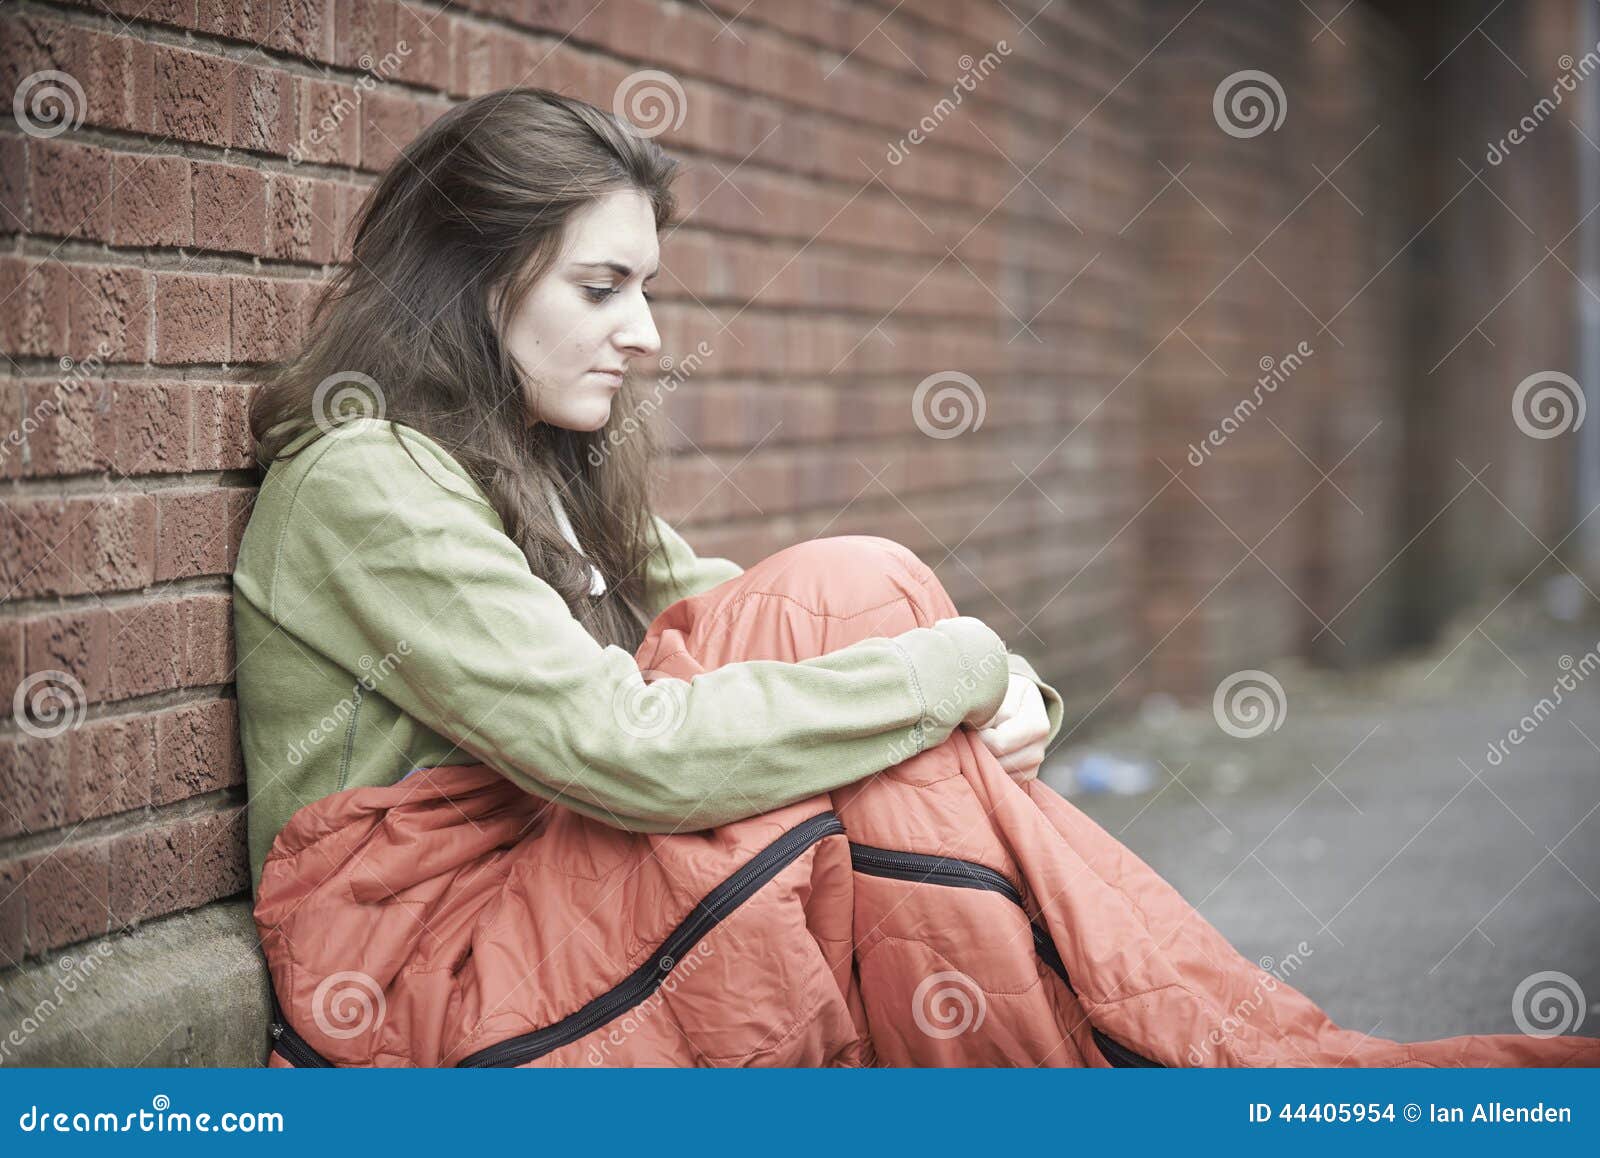 vulnerable teenage girl sleeping on the street